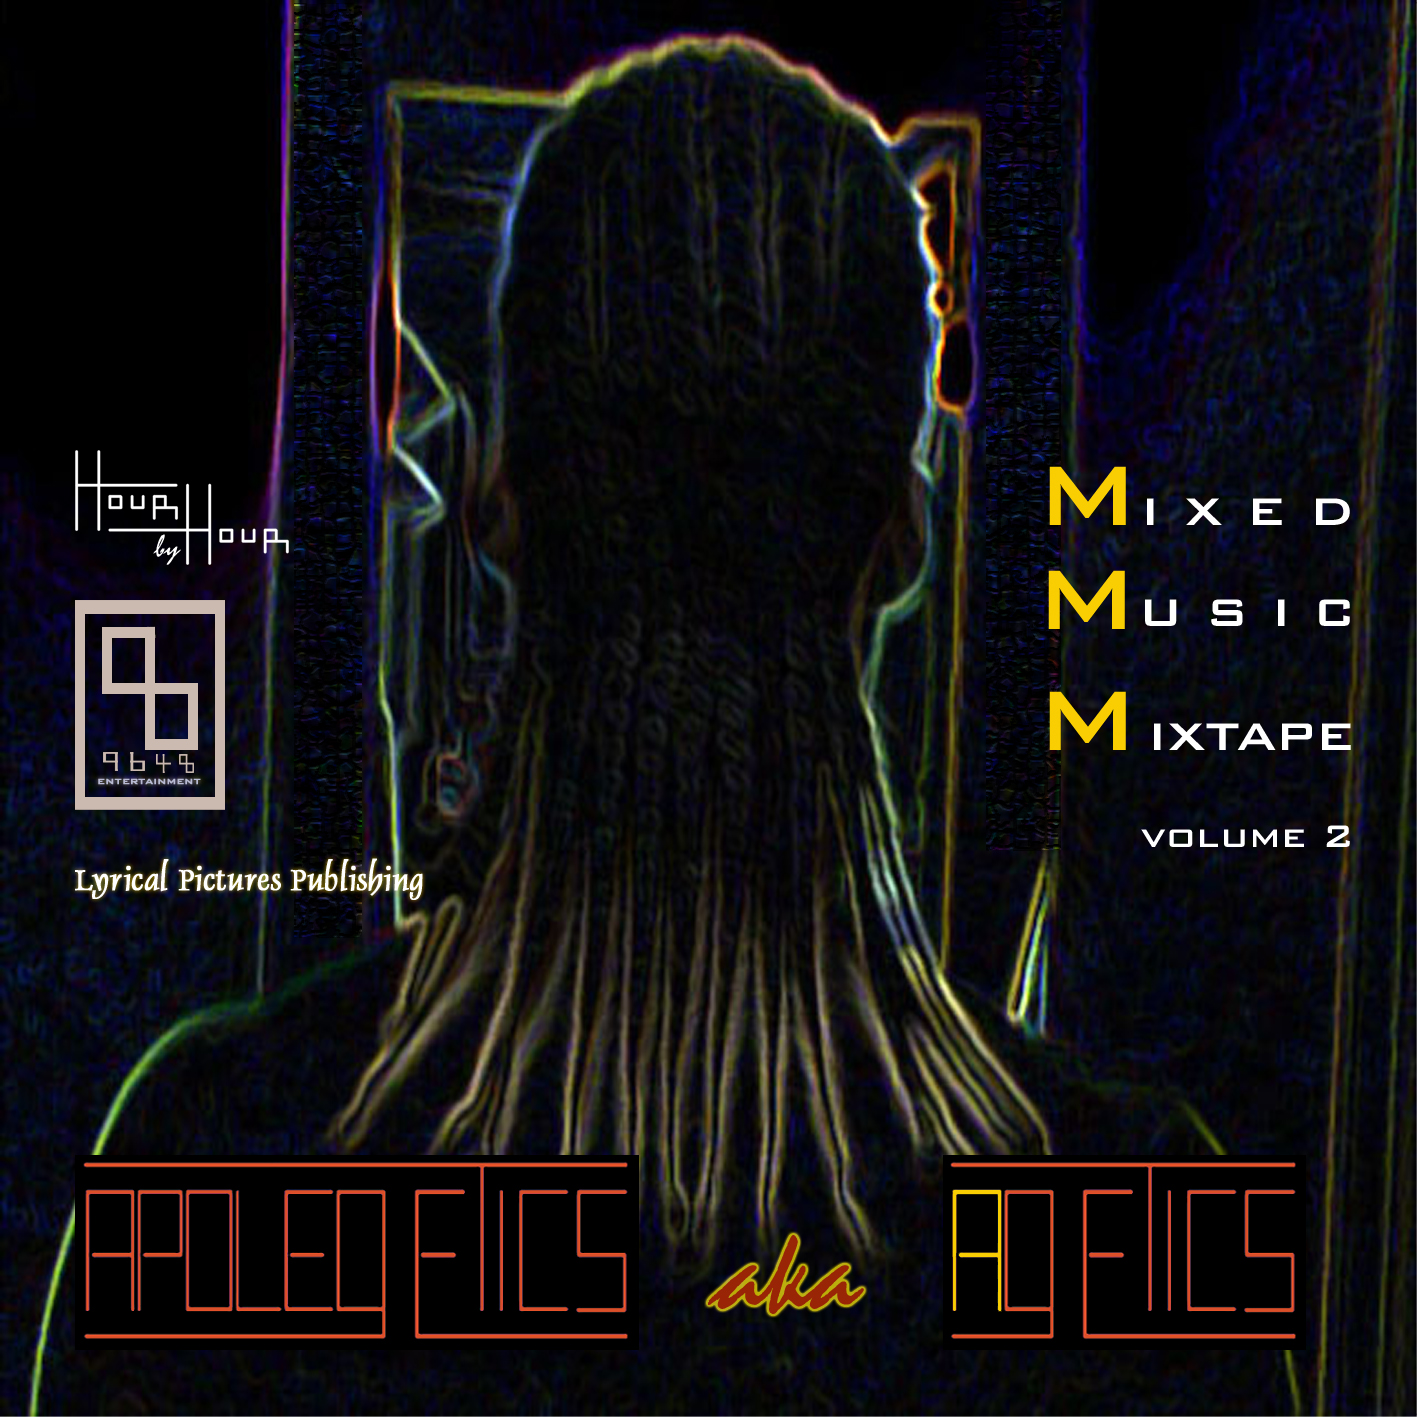  Mixed Music Mixtape Volume 2 cover - APOLEGETICS AKA AGETICS - July 31 / 2009 - NEW BEGININGS 